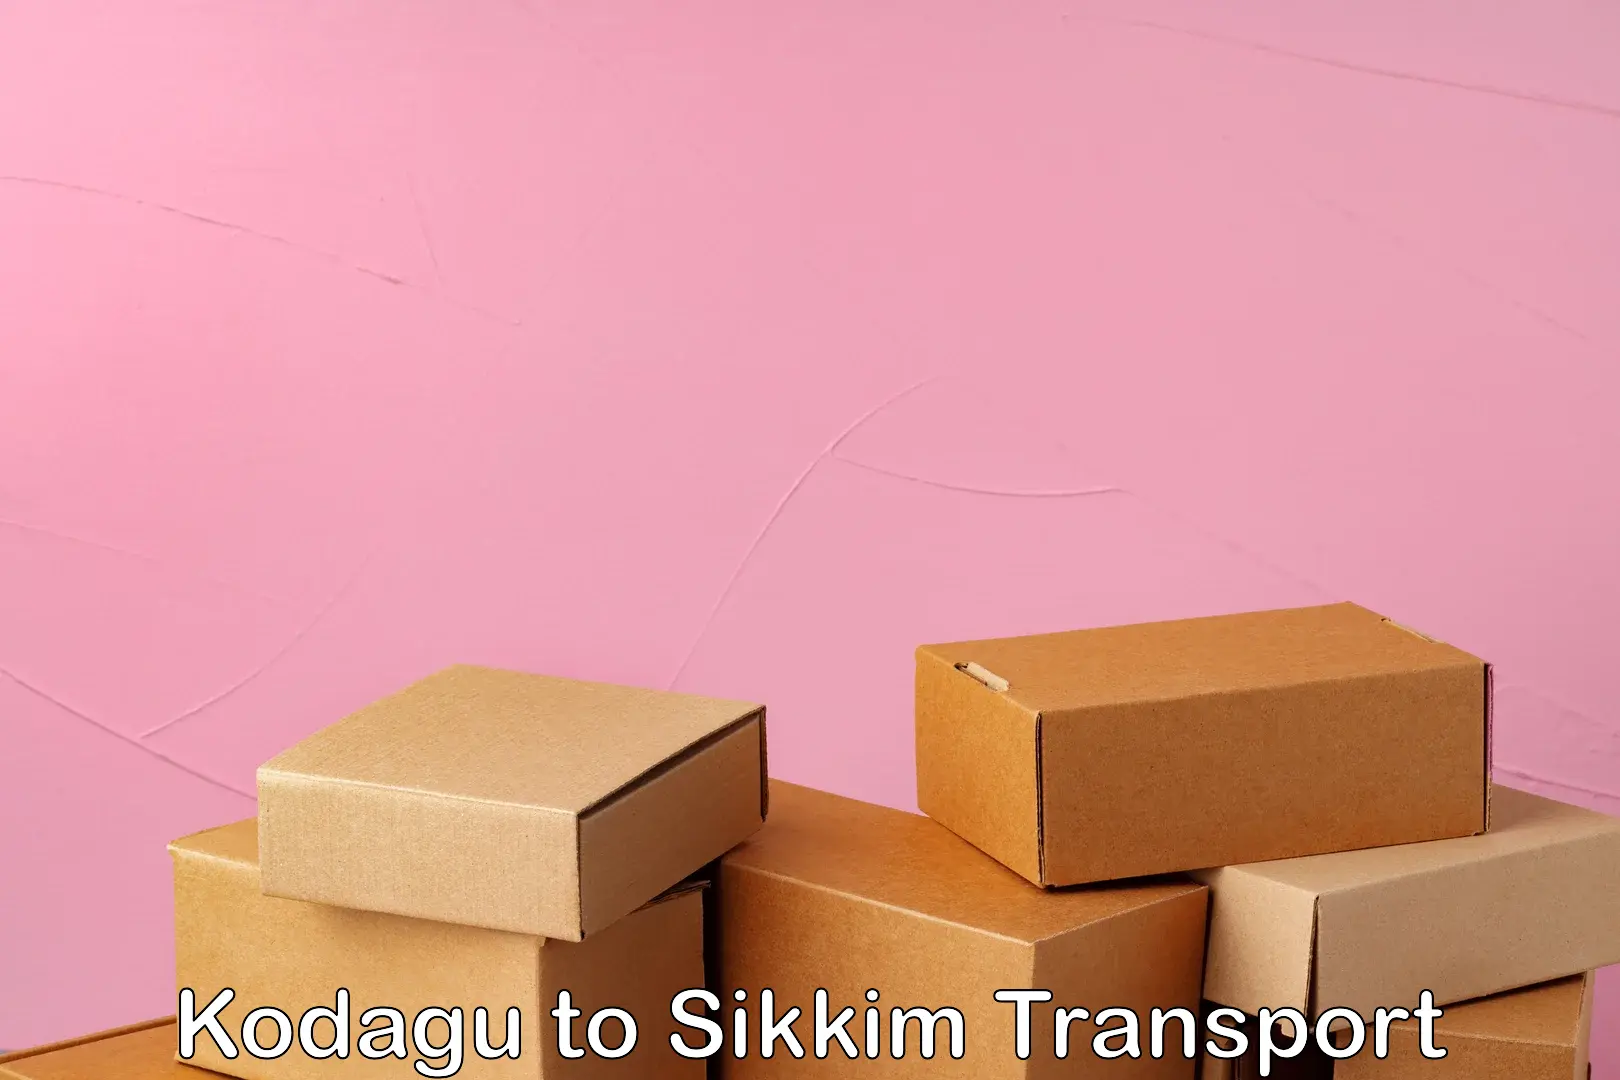 Transport in sharing in Kodagu to Mangan